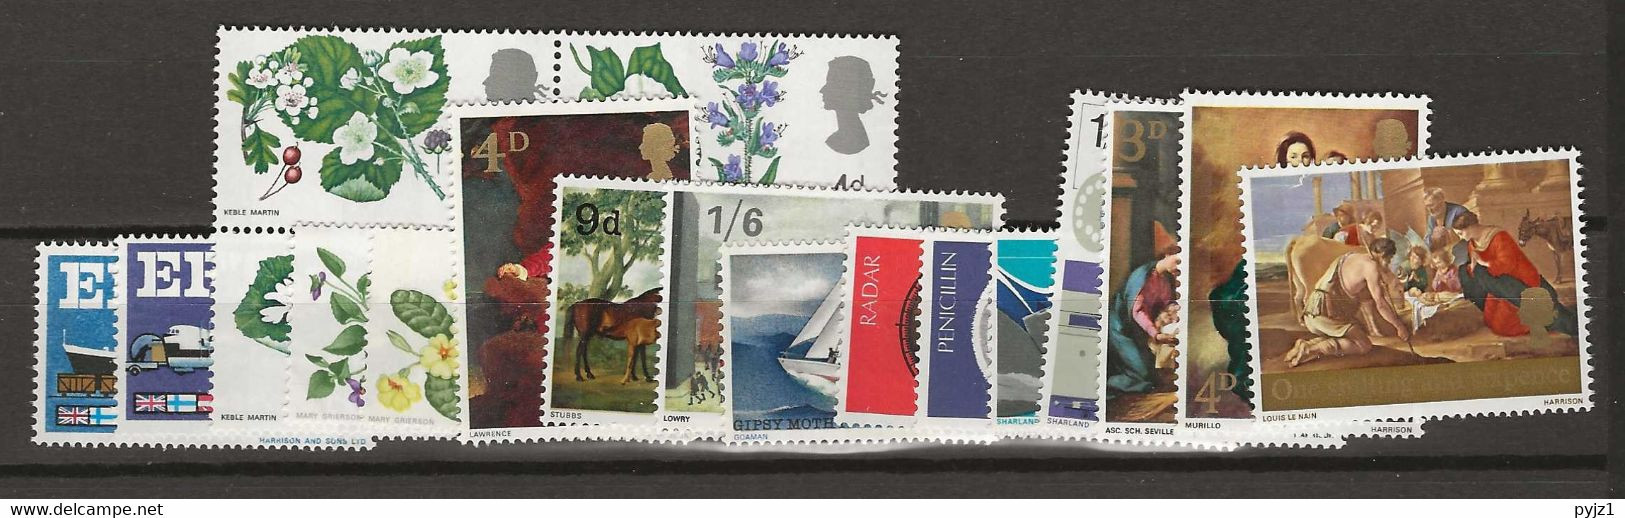 1967 MNH GB, UK, Engeland, Year Collection Commemoratives, Postfris - Nuevos